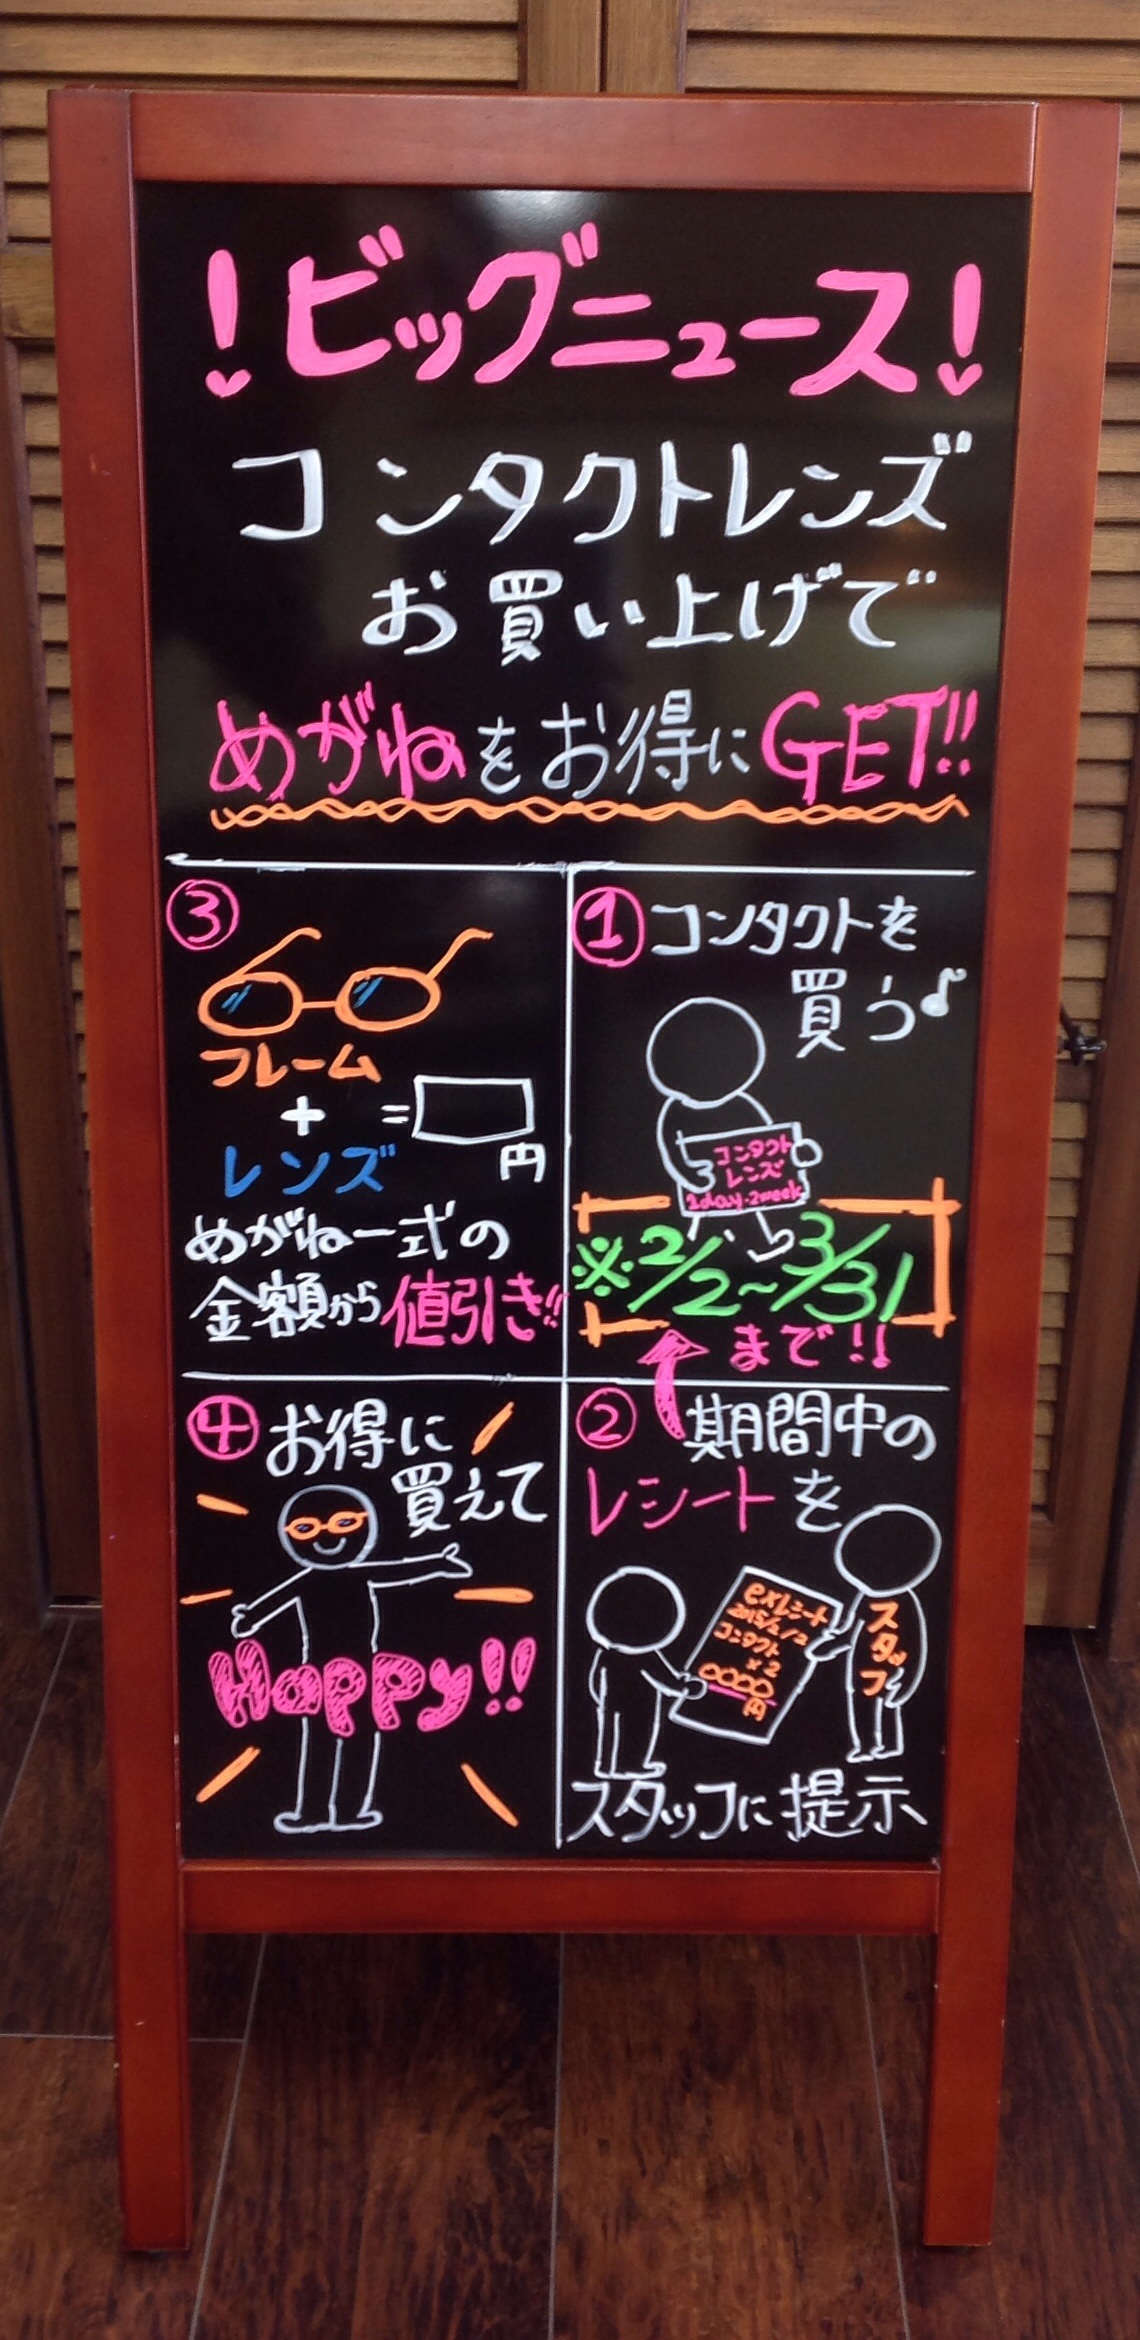 http://www.root-ex.co.jp/jumonji/2015/02/02/image.jpg